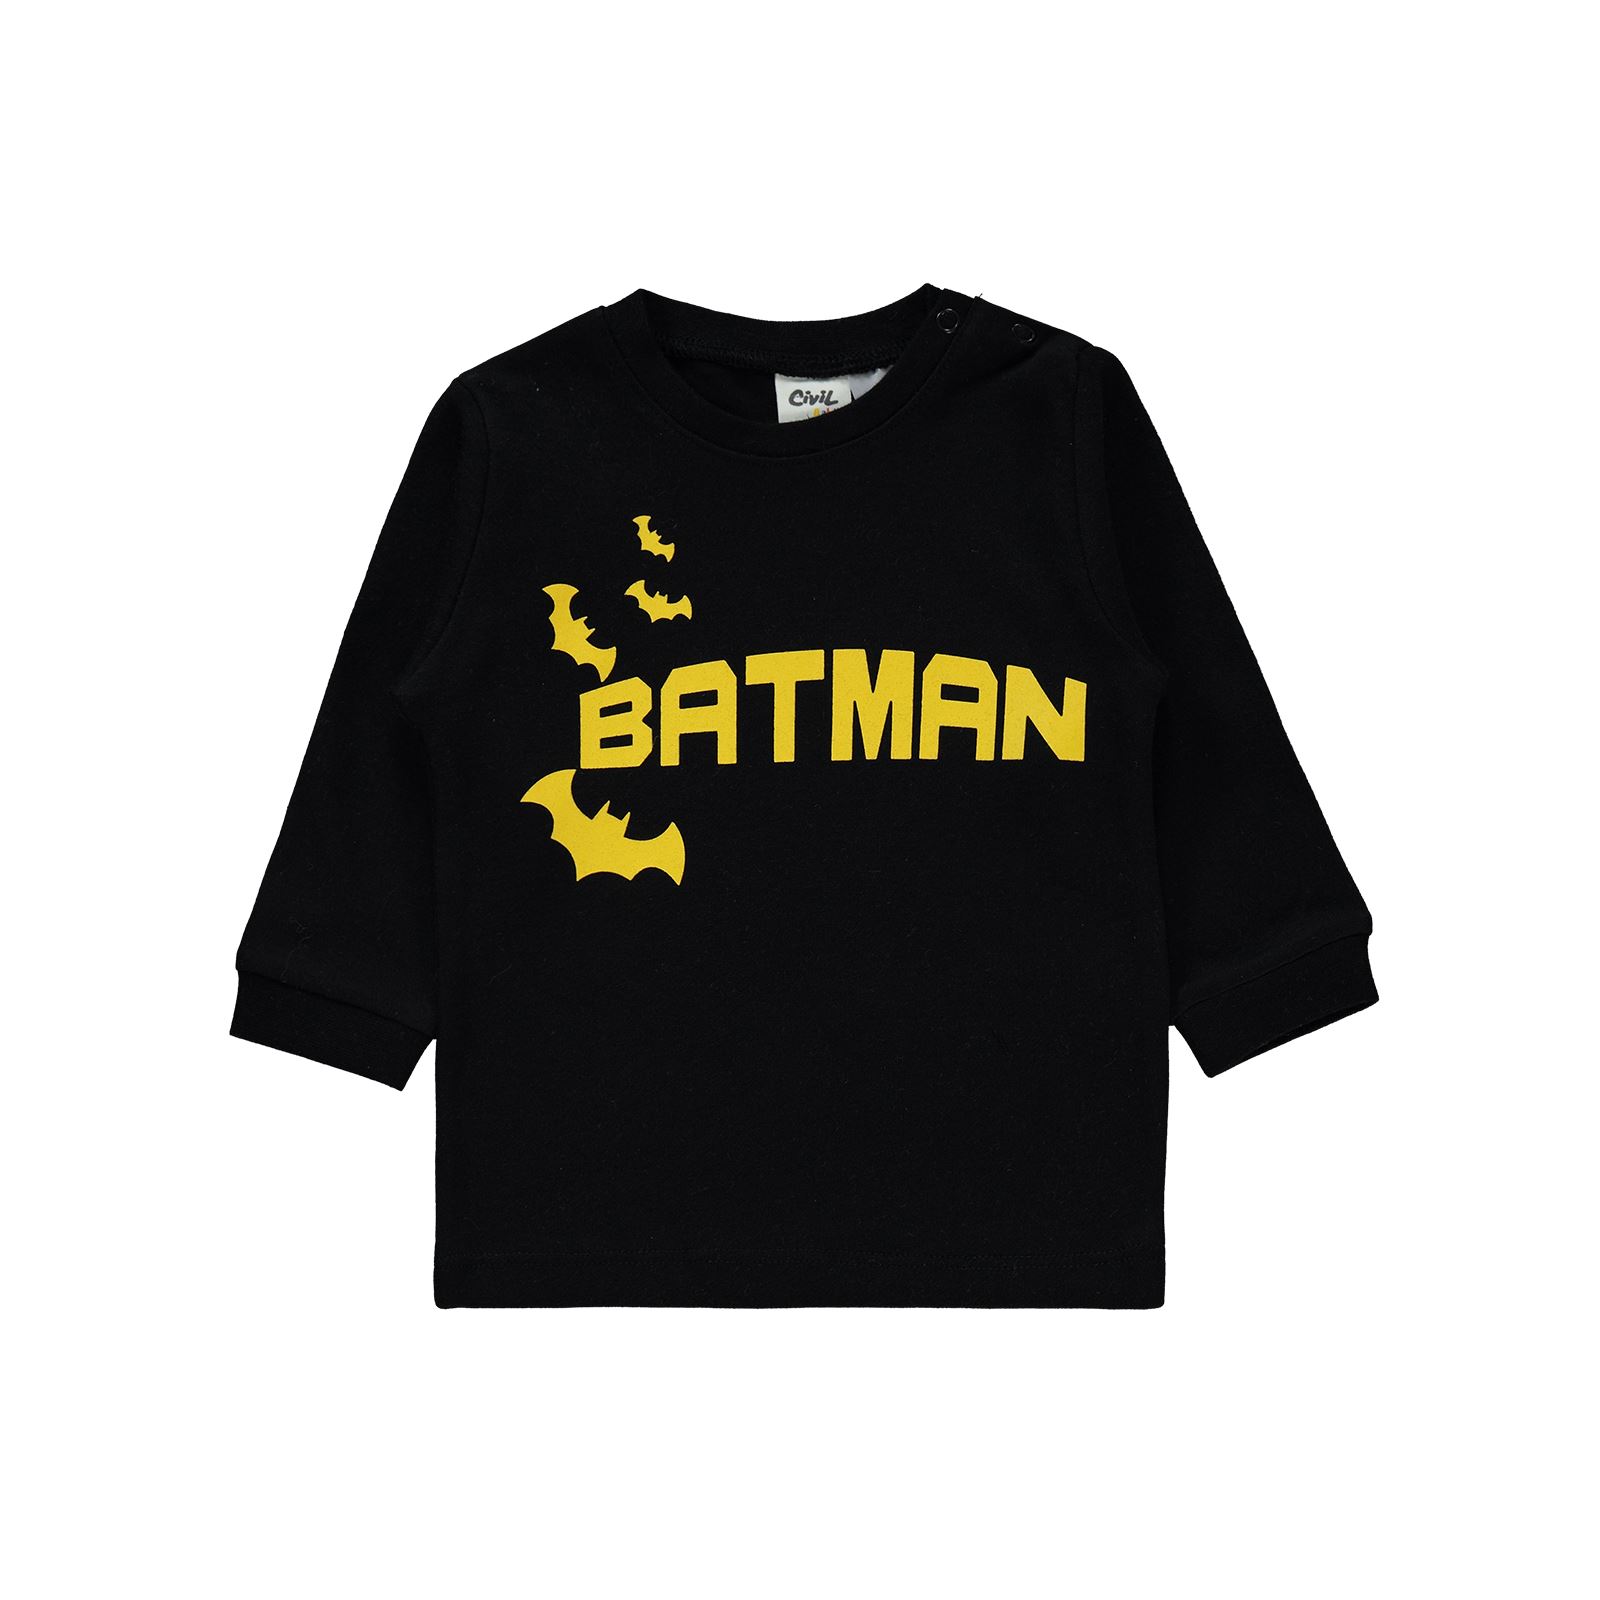 Batman Erkek Bebek Takım 6-18 Ay Siyah